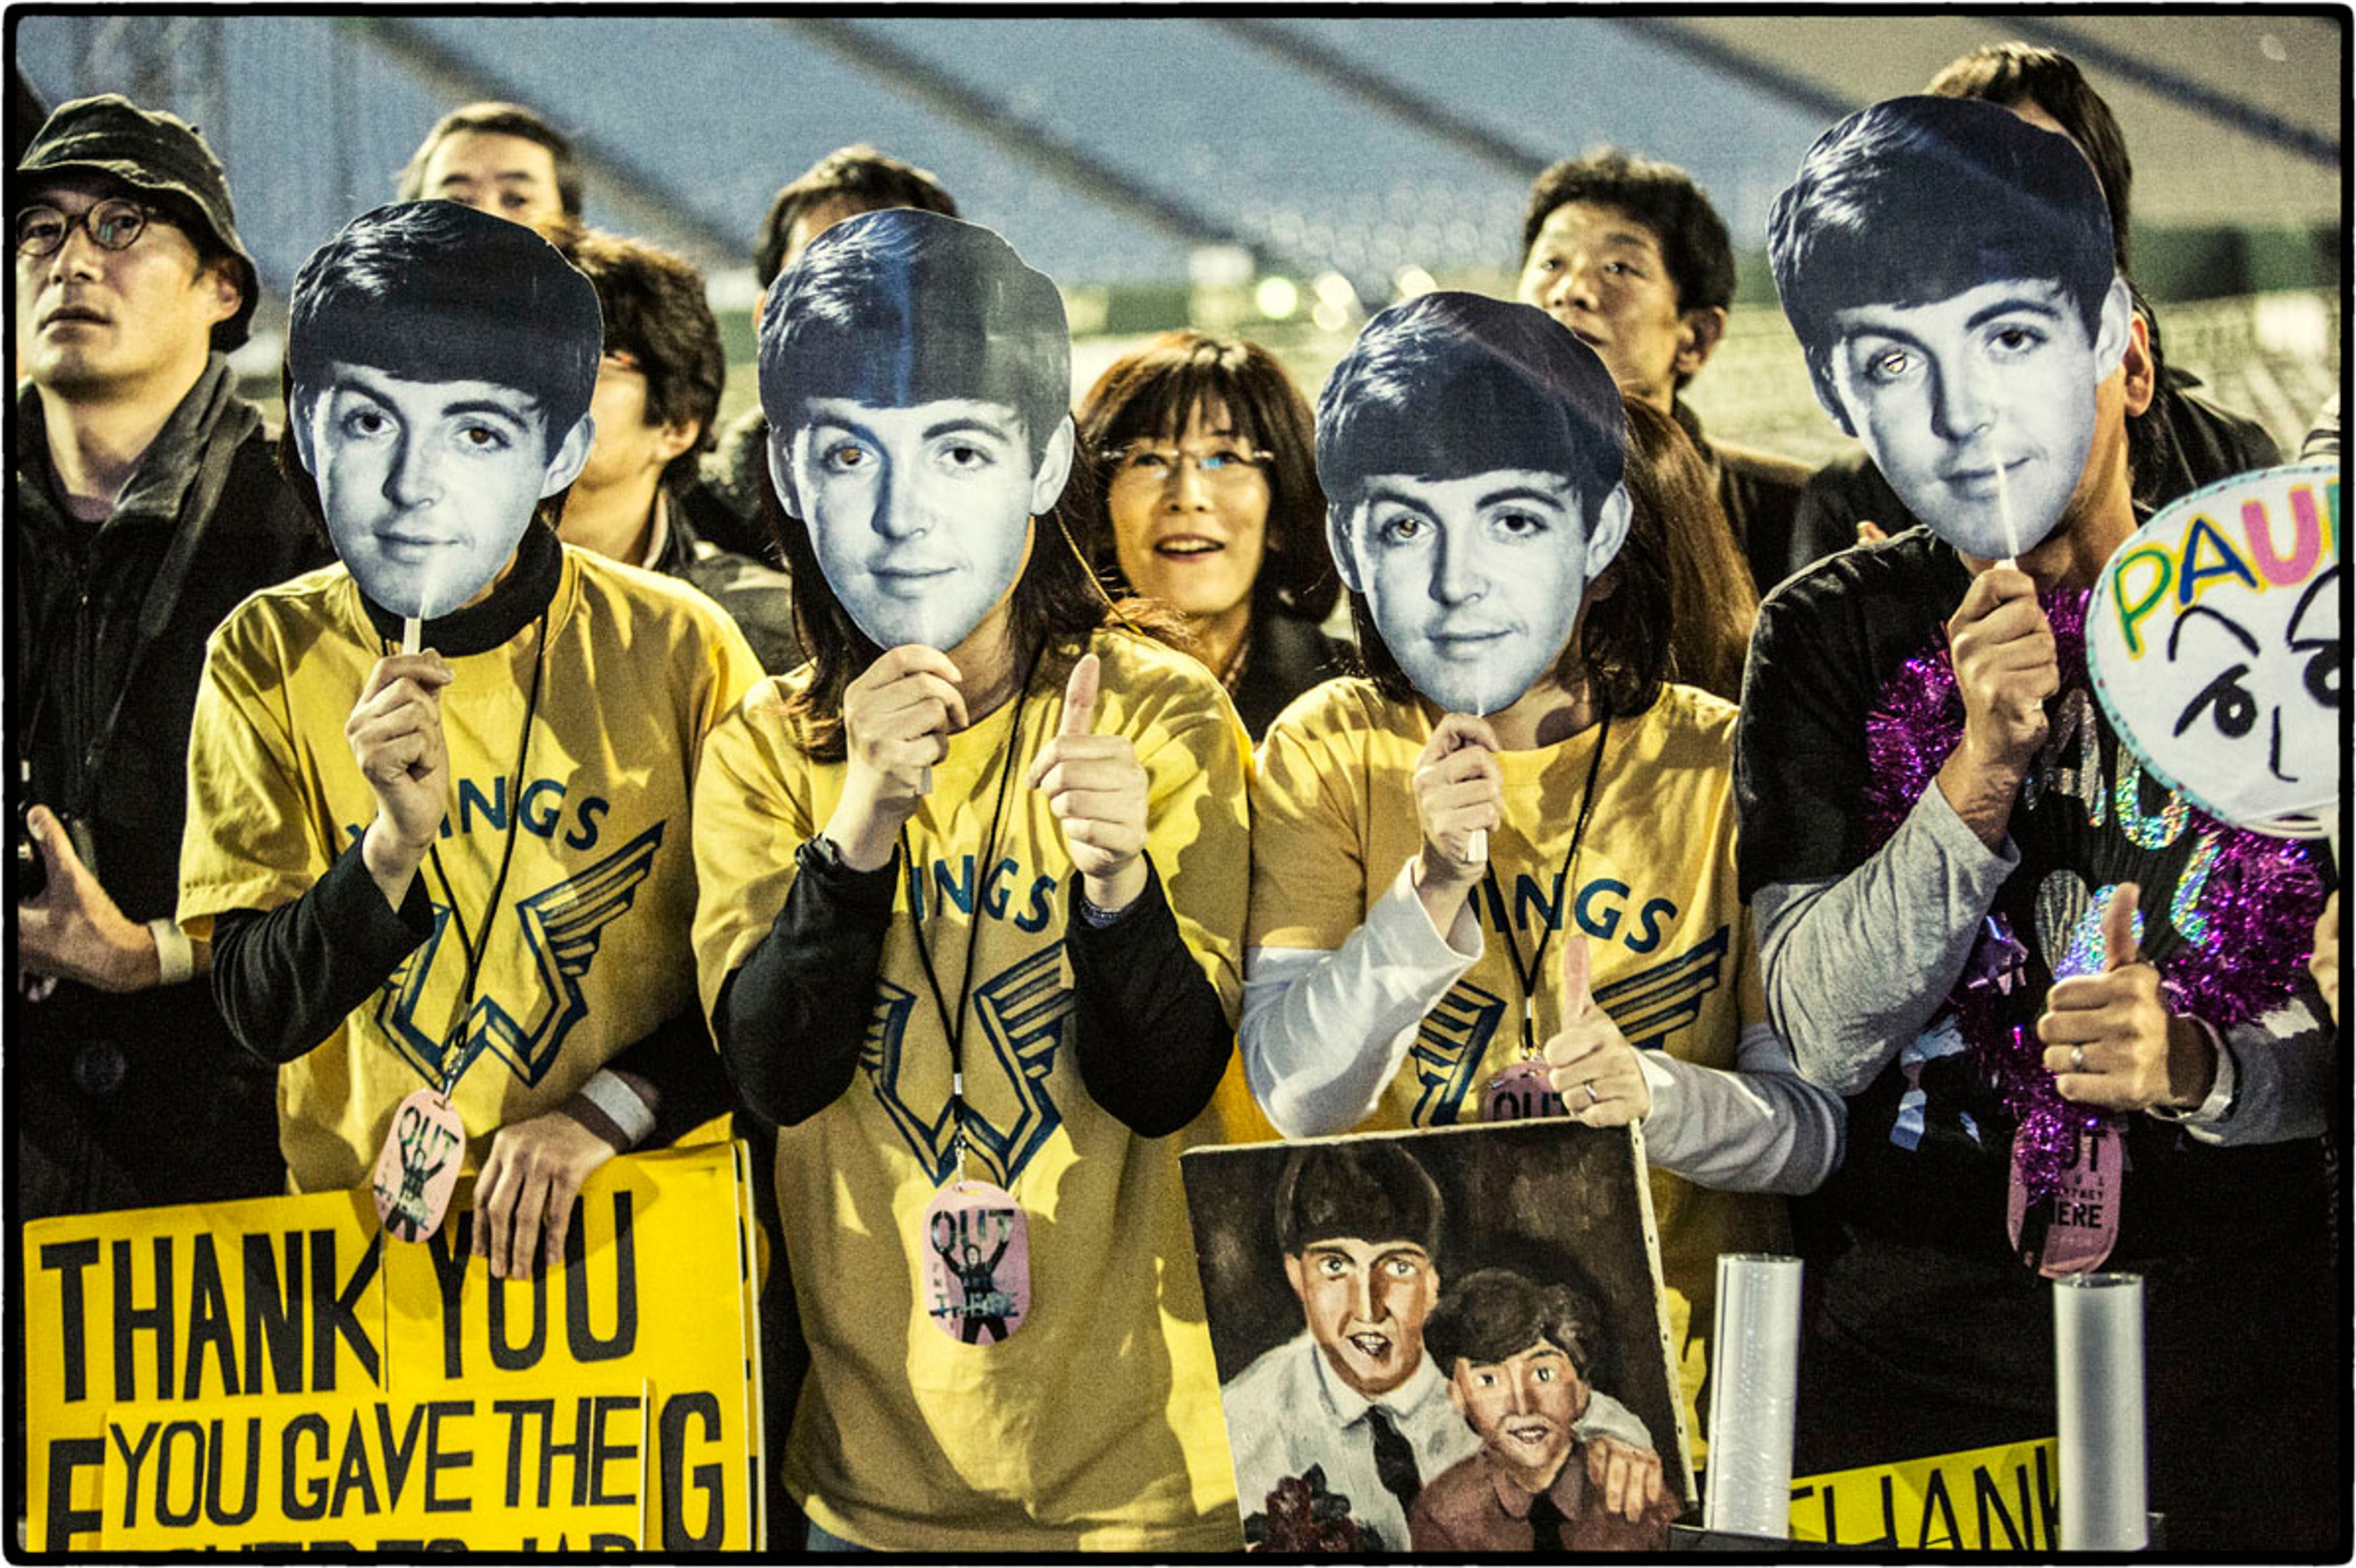 Fans at the Tokyo Dome soundcheck, Tokyo, 21st November 2013